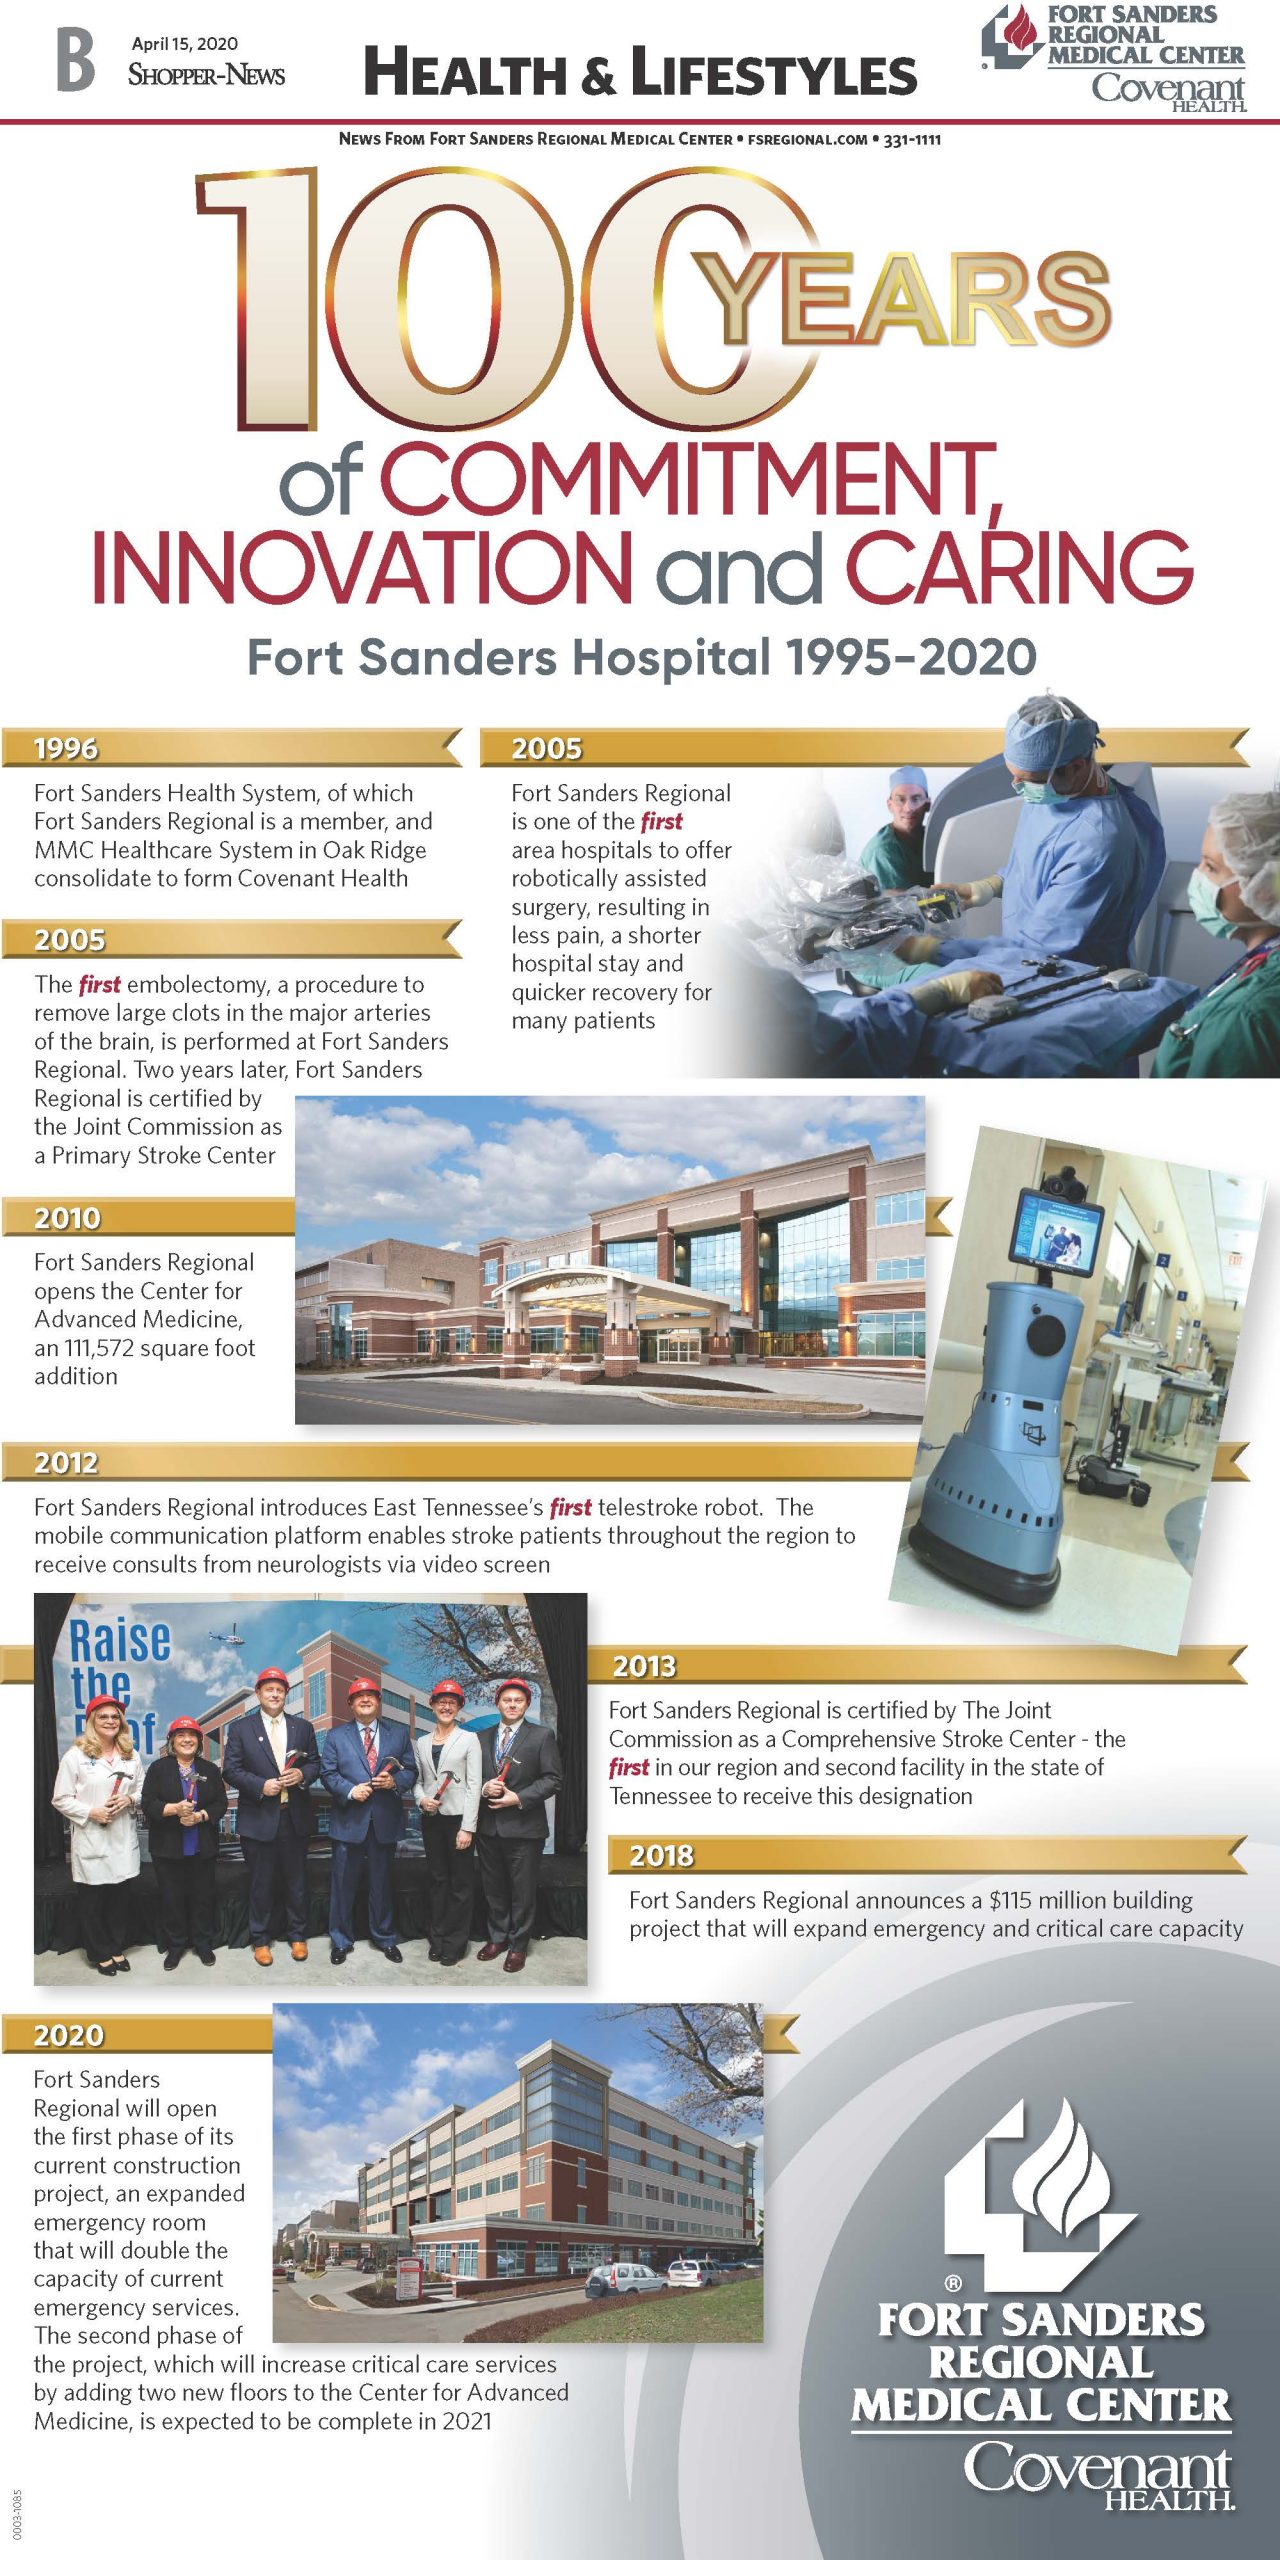 Fort Sanders Regional Medical Center: 1995-2020 Highlights